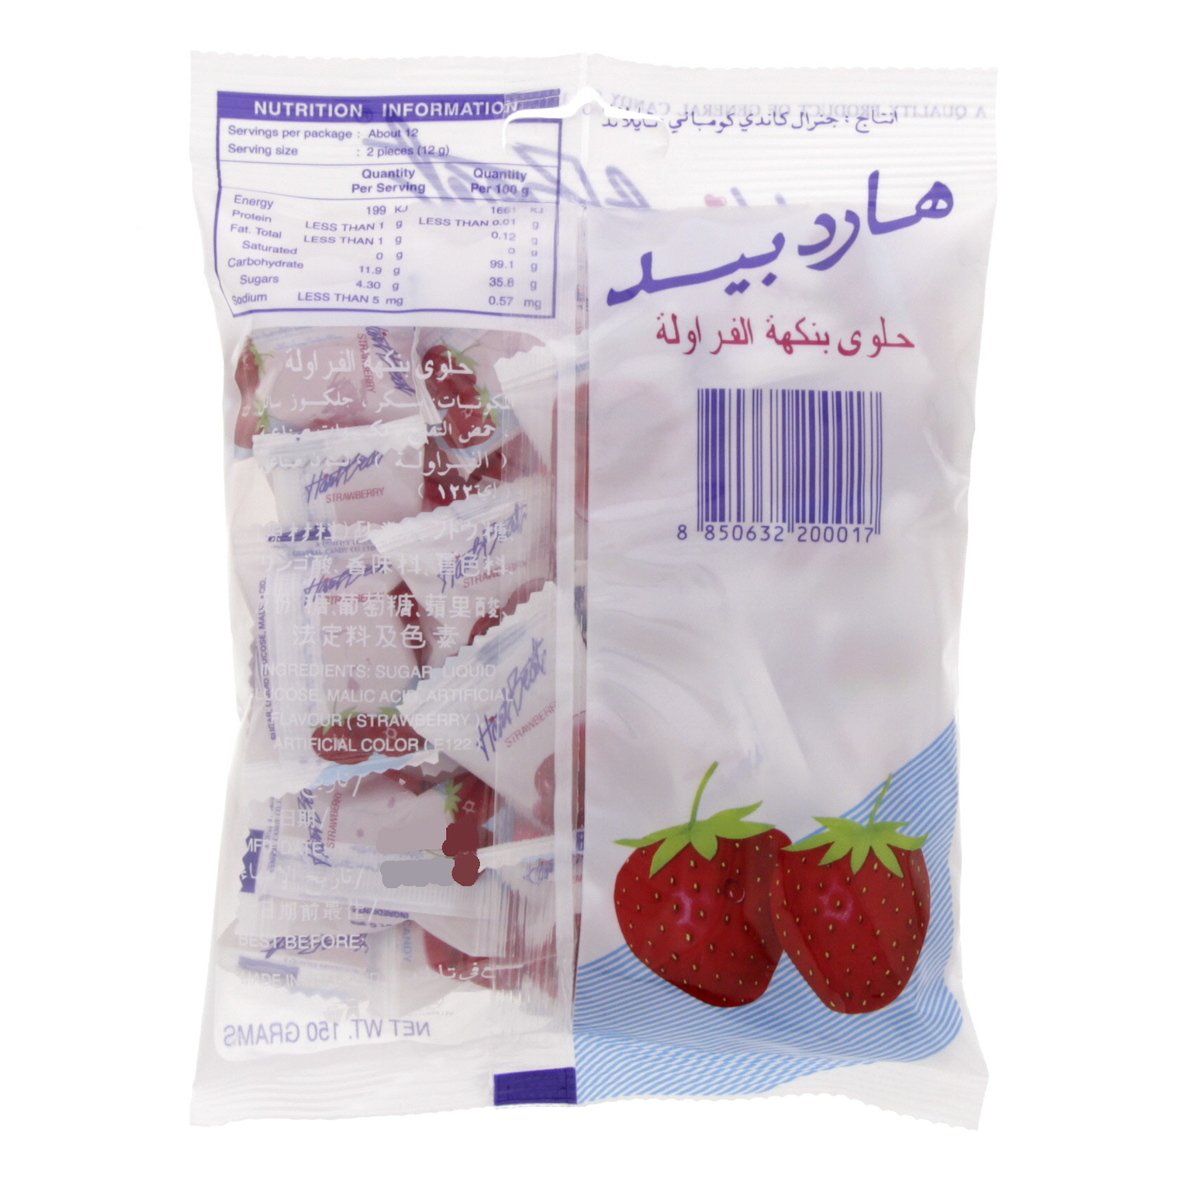 Hartbeat Strawberry Love Candy, 150 g